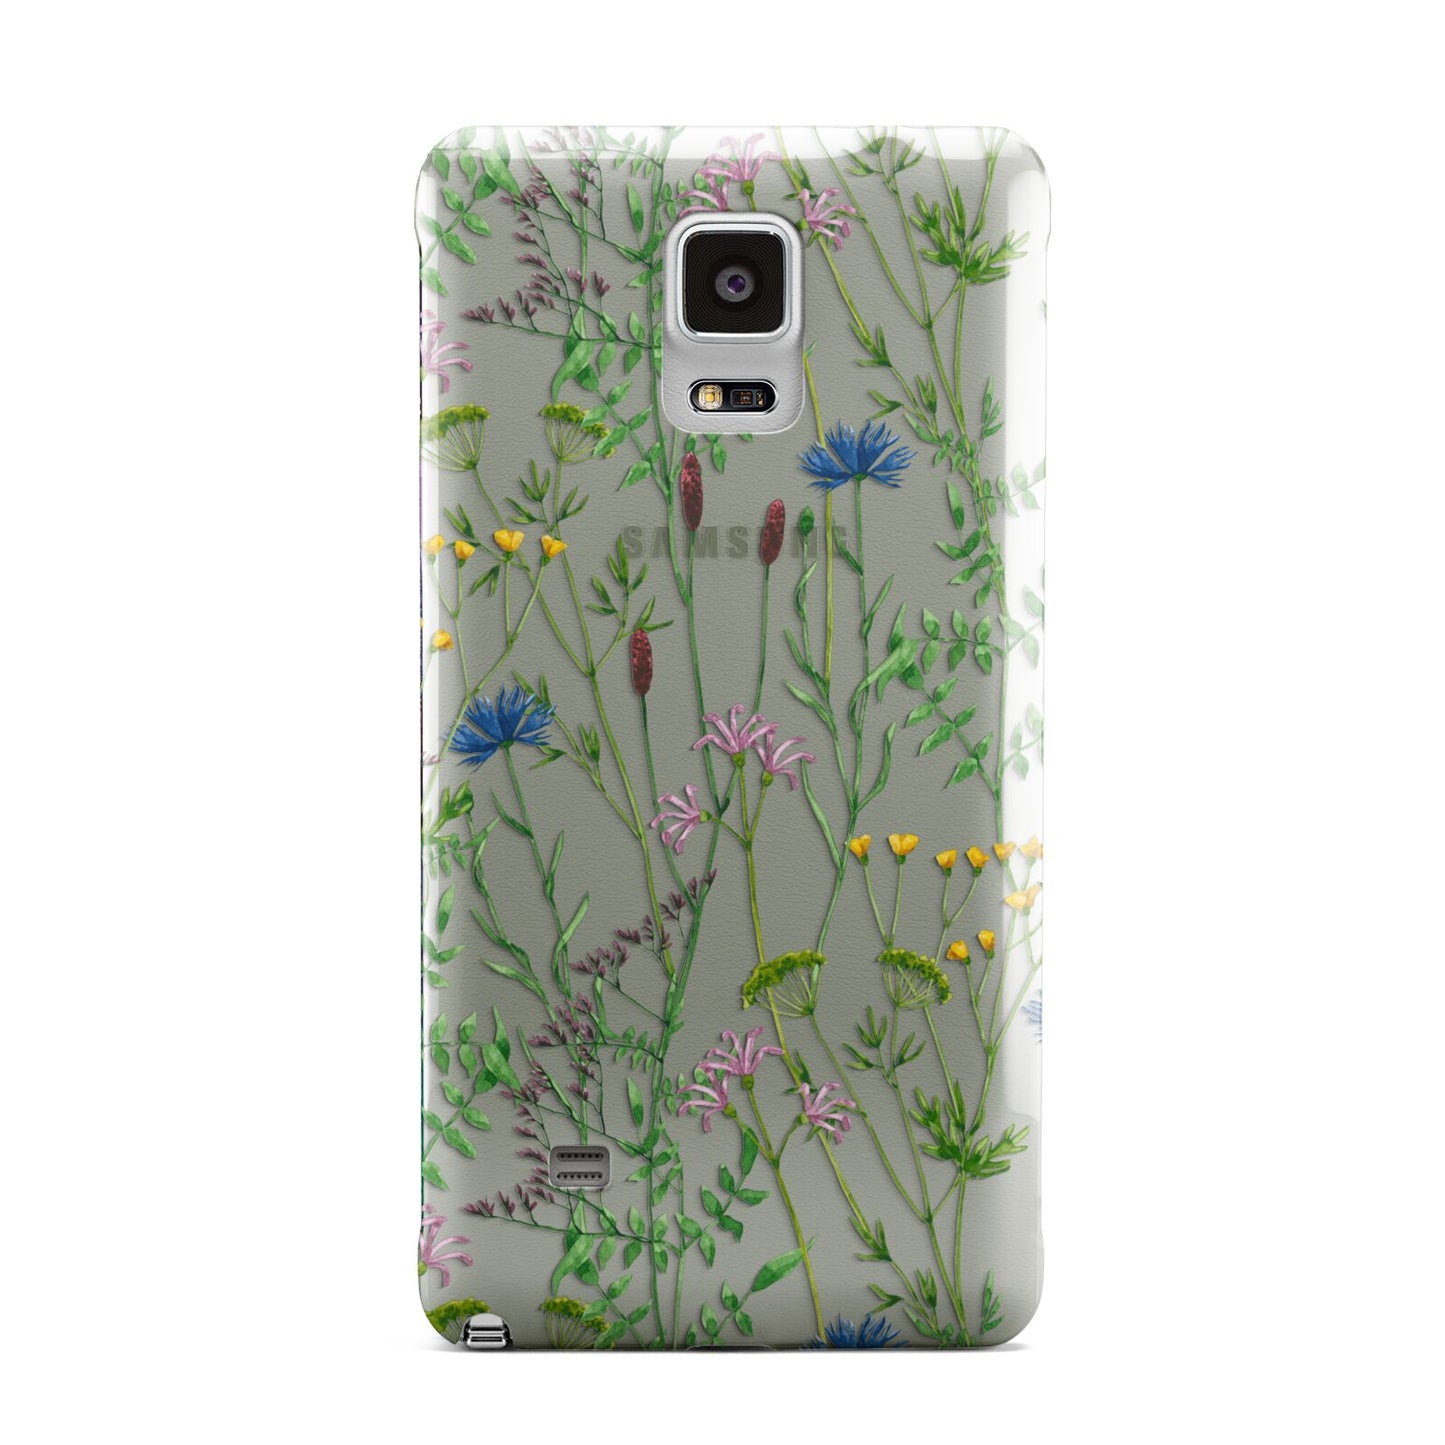 Wildflowers Samsung Galaxy Note 4 Case